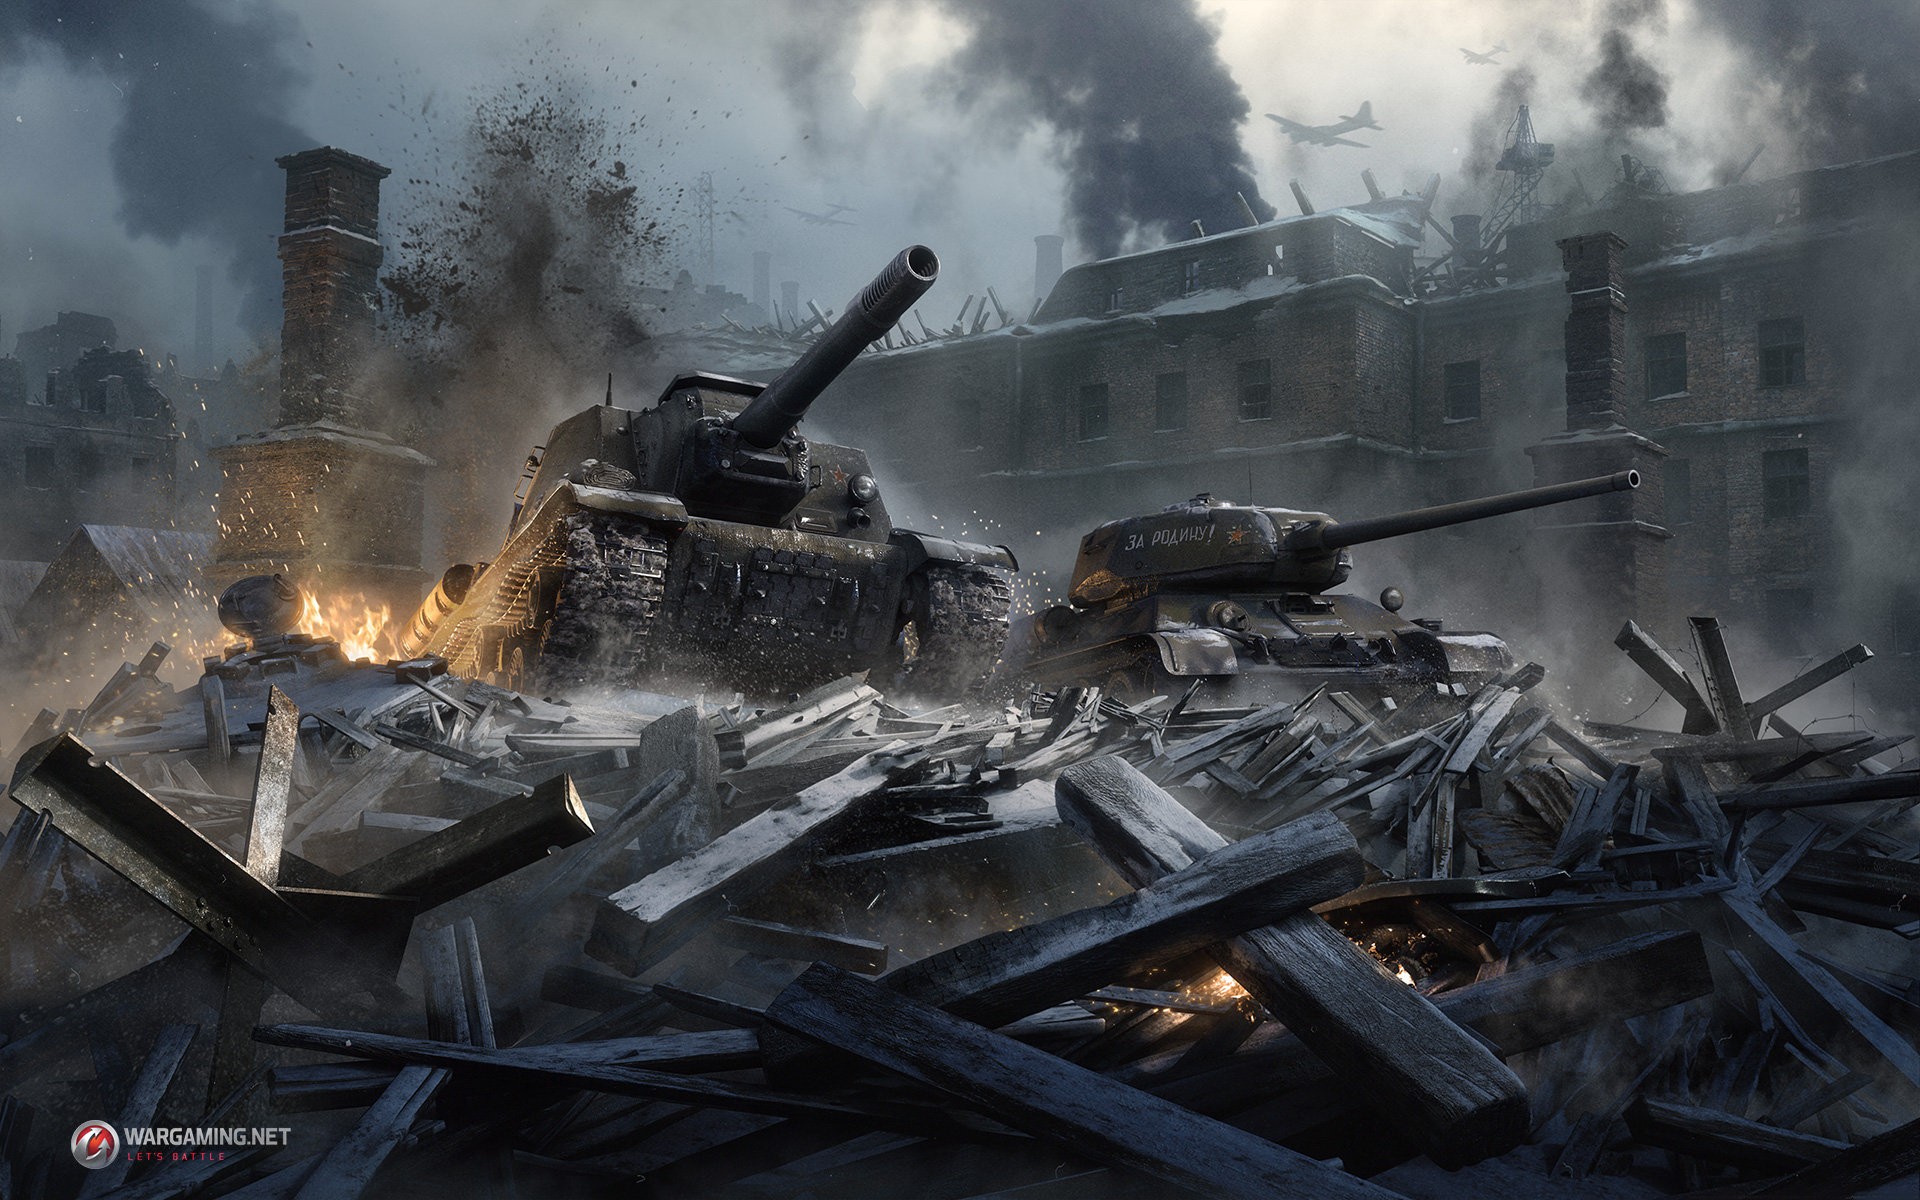 General 1920x1200 World of Tanks tank PC gaming war video games military vehicle video game art ruins ArtStation